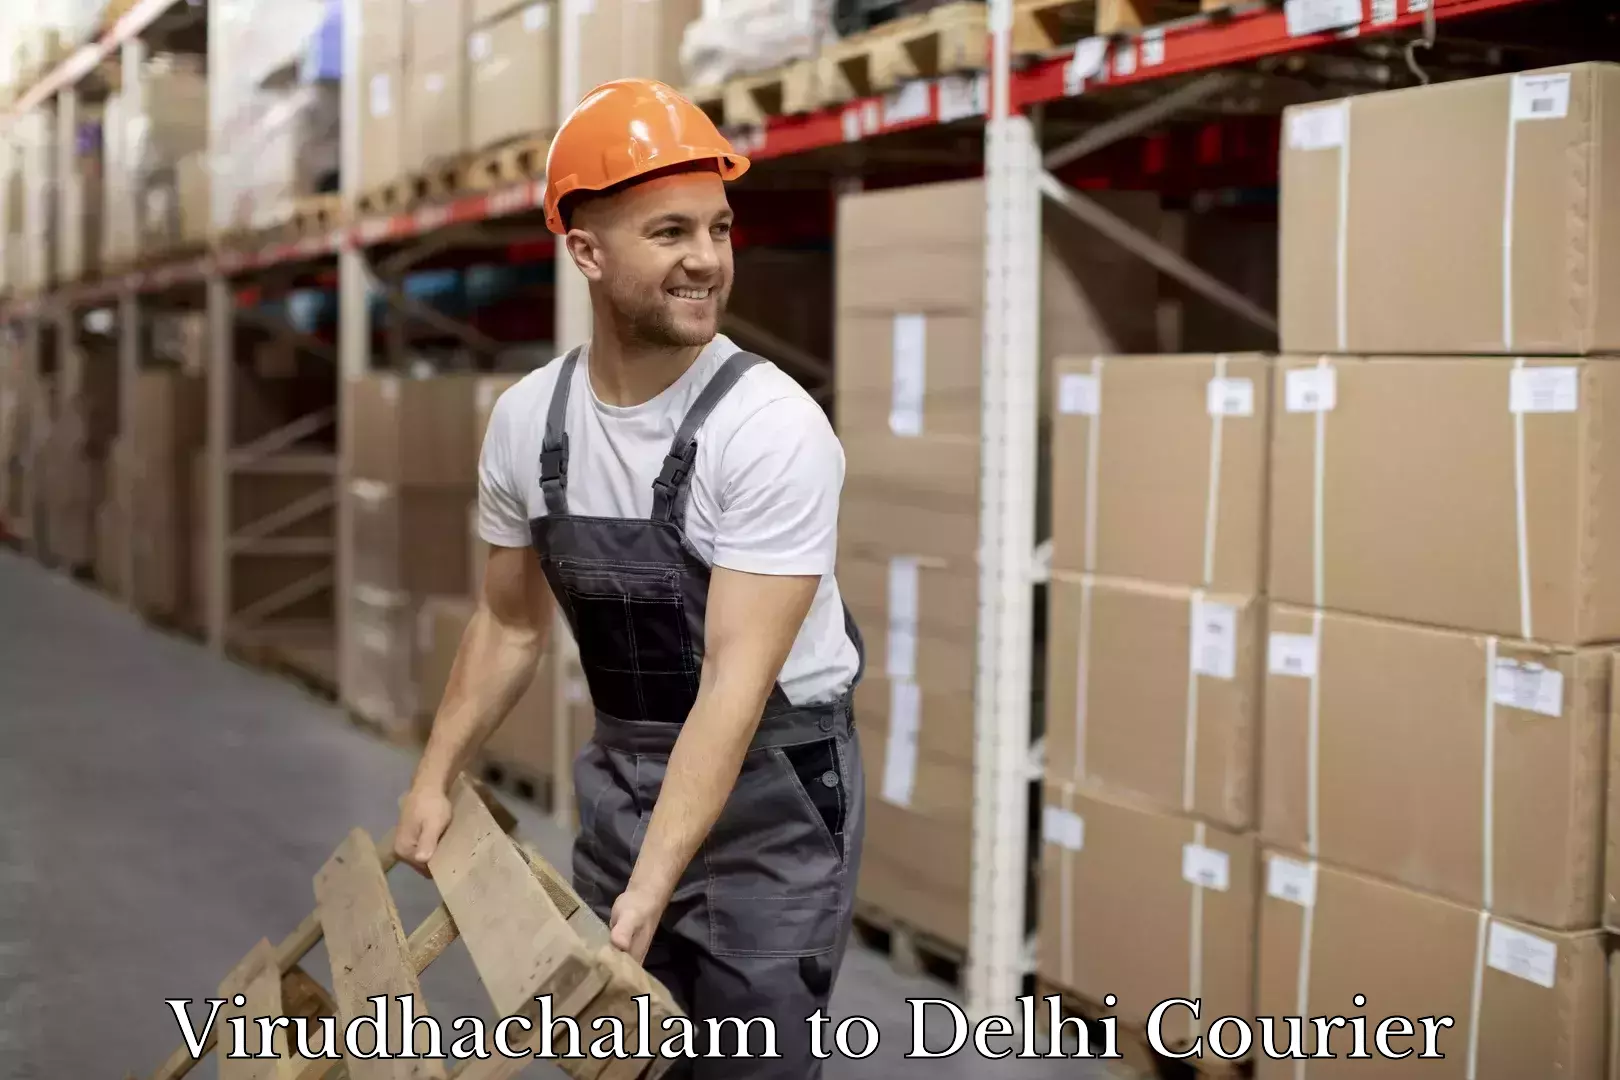 Global logistics network Virudhachalam to Delhi